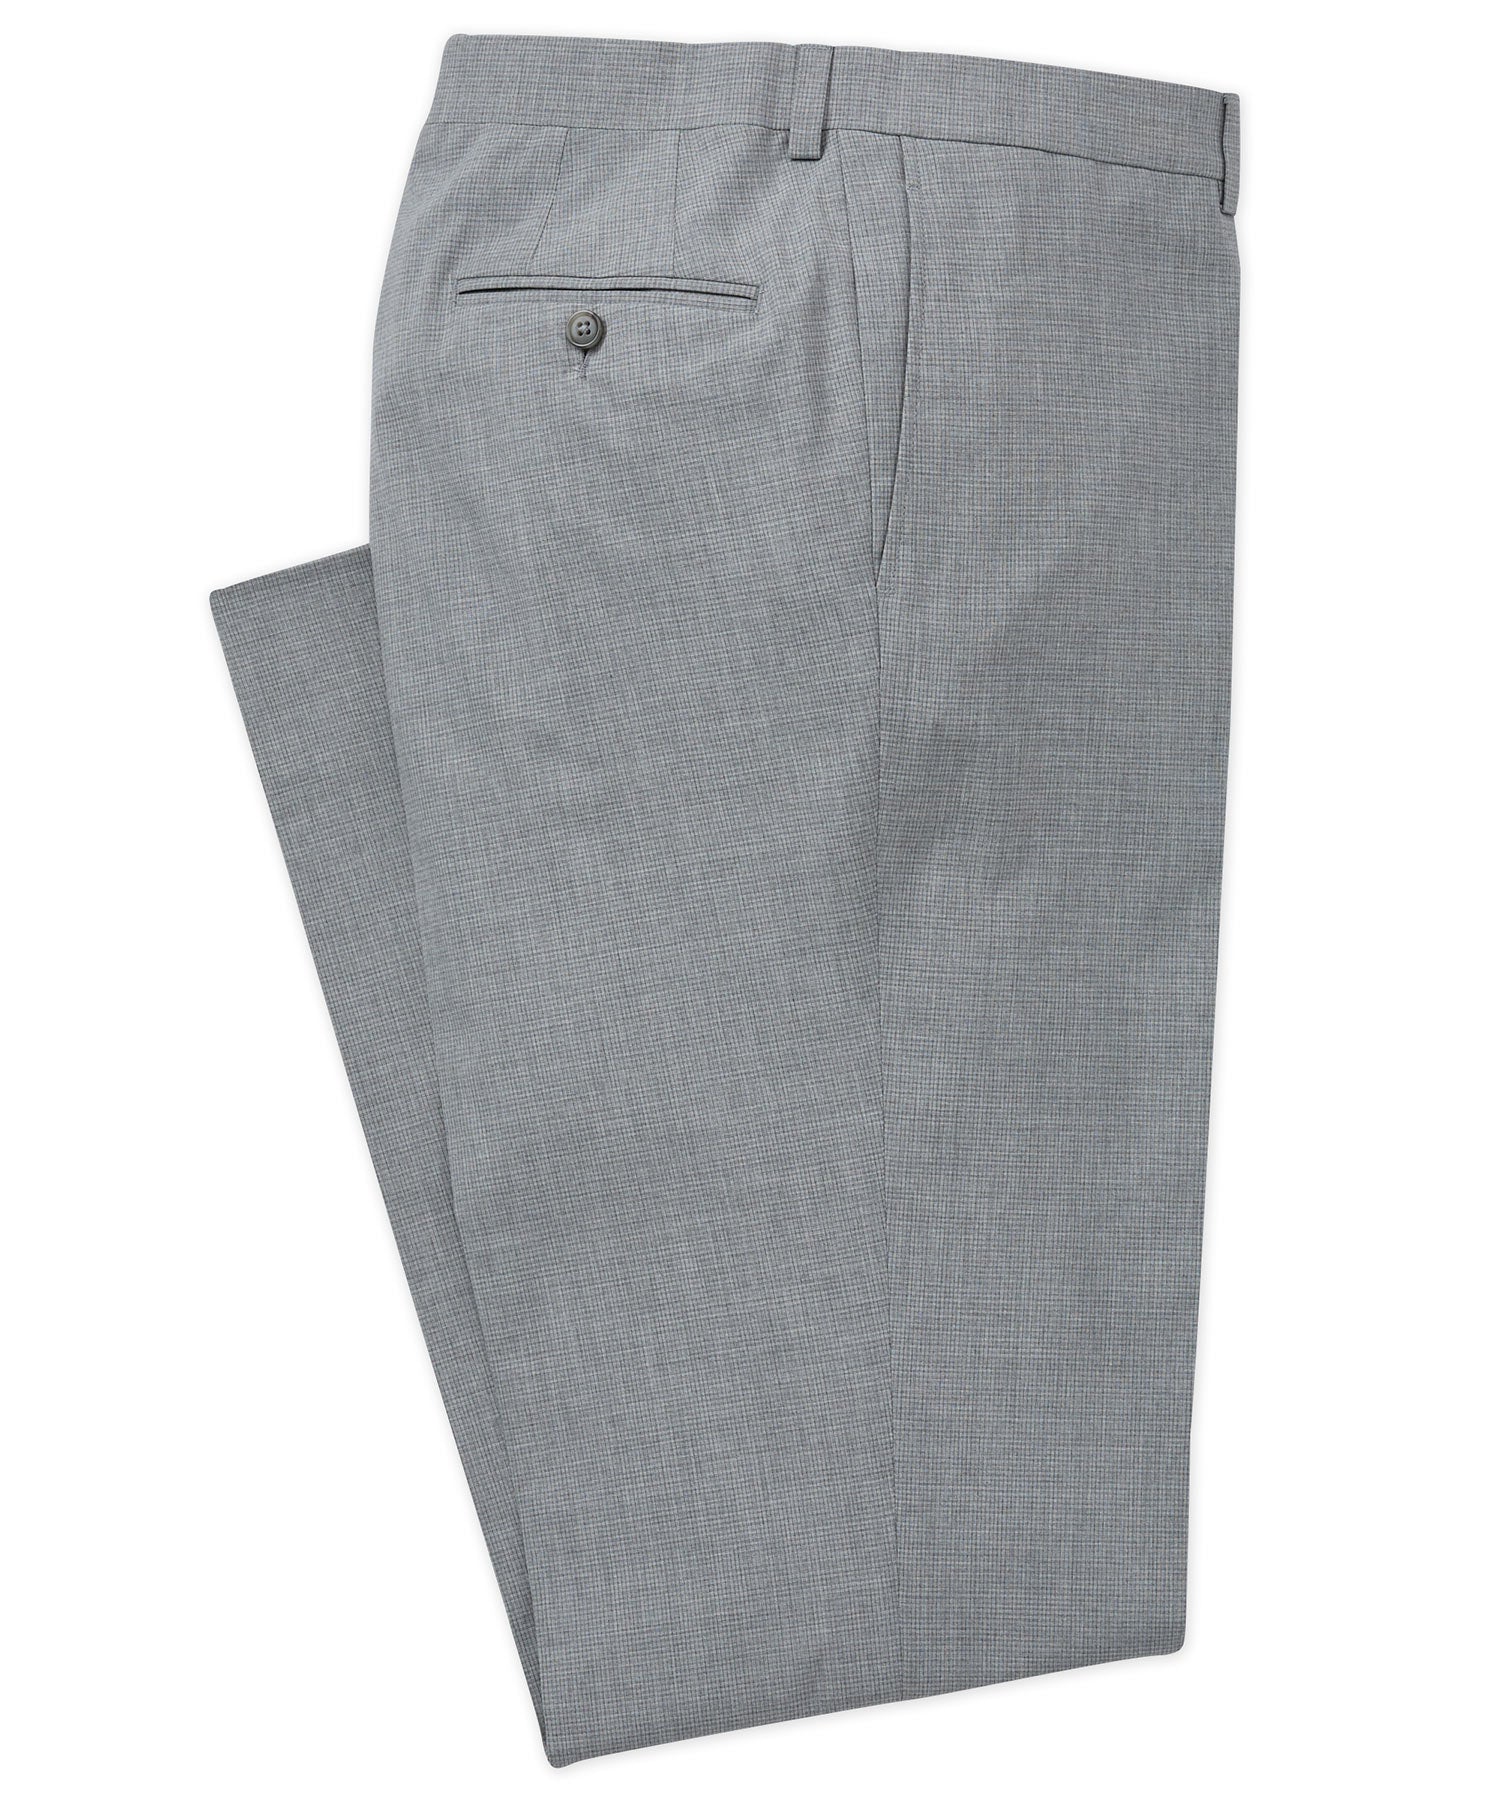 Jack Victor Riviera Flat Front Check Patterned Dress Pants, Men's Big & Tall